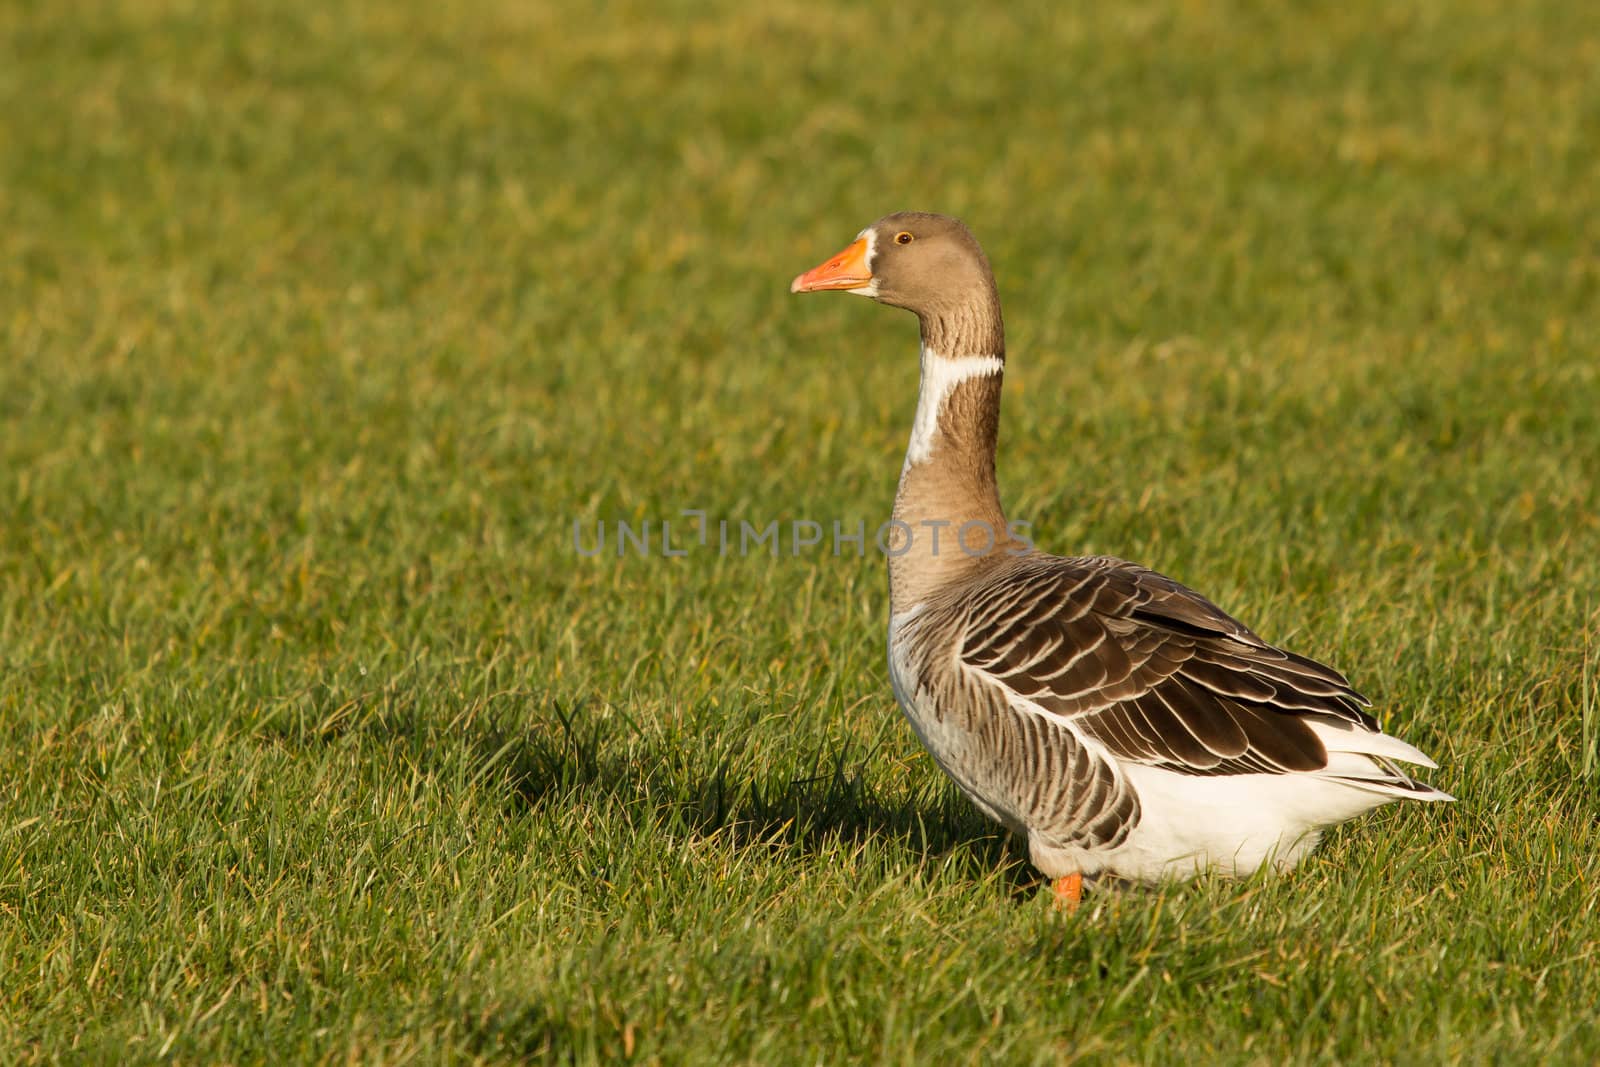 A goose in a field